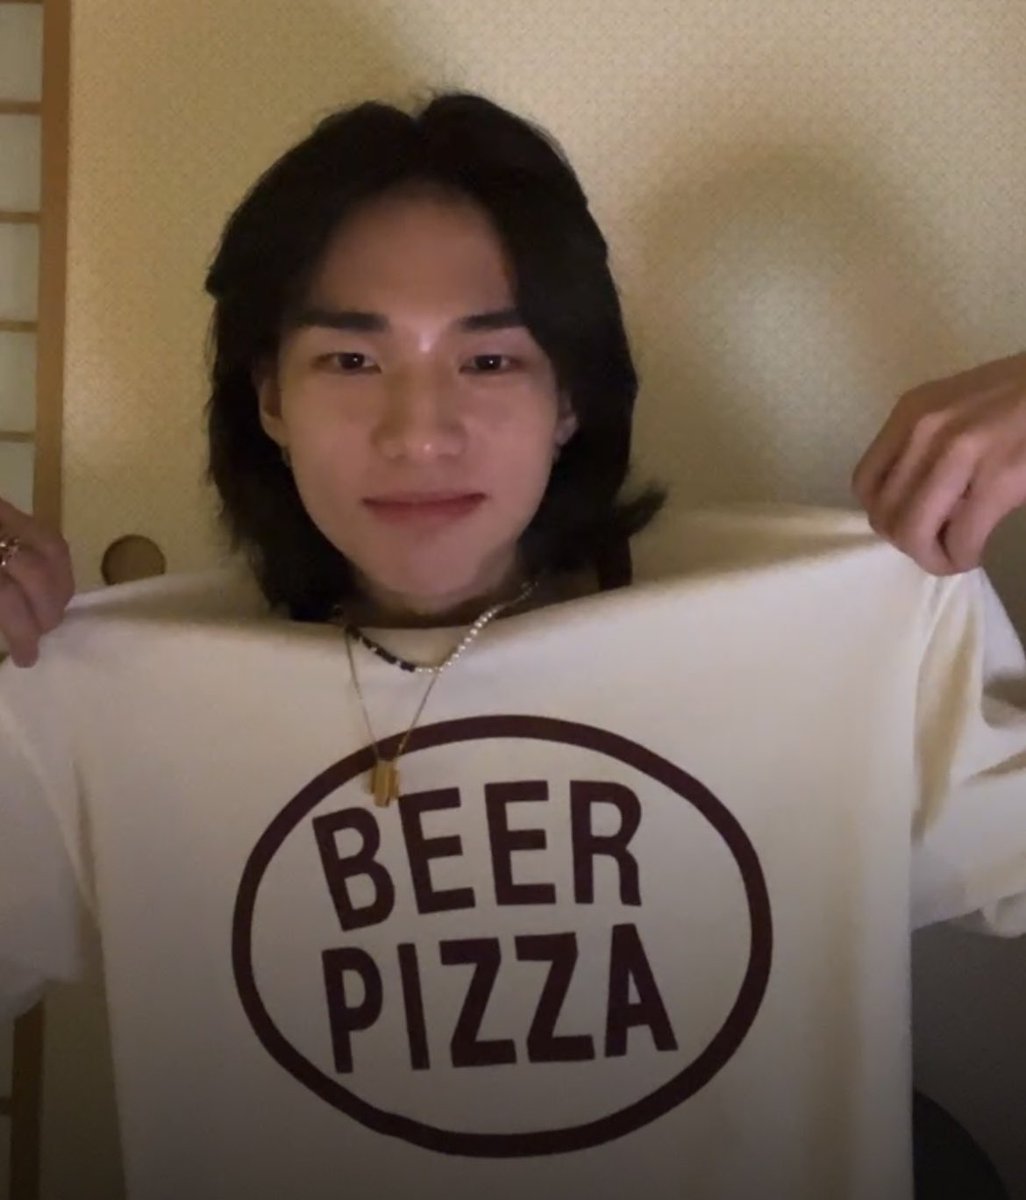 Hyunjin 현진 Central on X: Hyunjin is wearing @LouisVuitton Striped Monogram  Workwear Denim Shirt in his new teaser for #NOEASY  🔗 CHECK NOEASY TEASER IMAGES #NOEASY_TeaserImages3  #Hyunjin #현진 @Stray_Kids